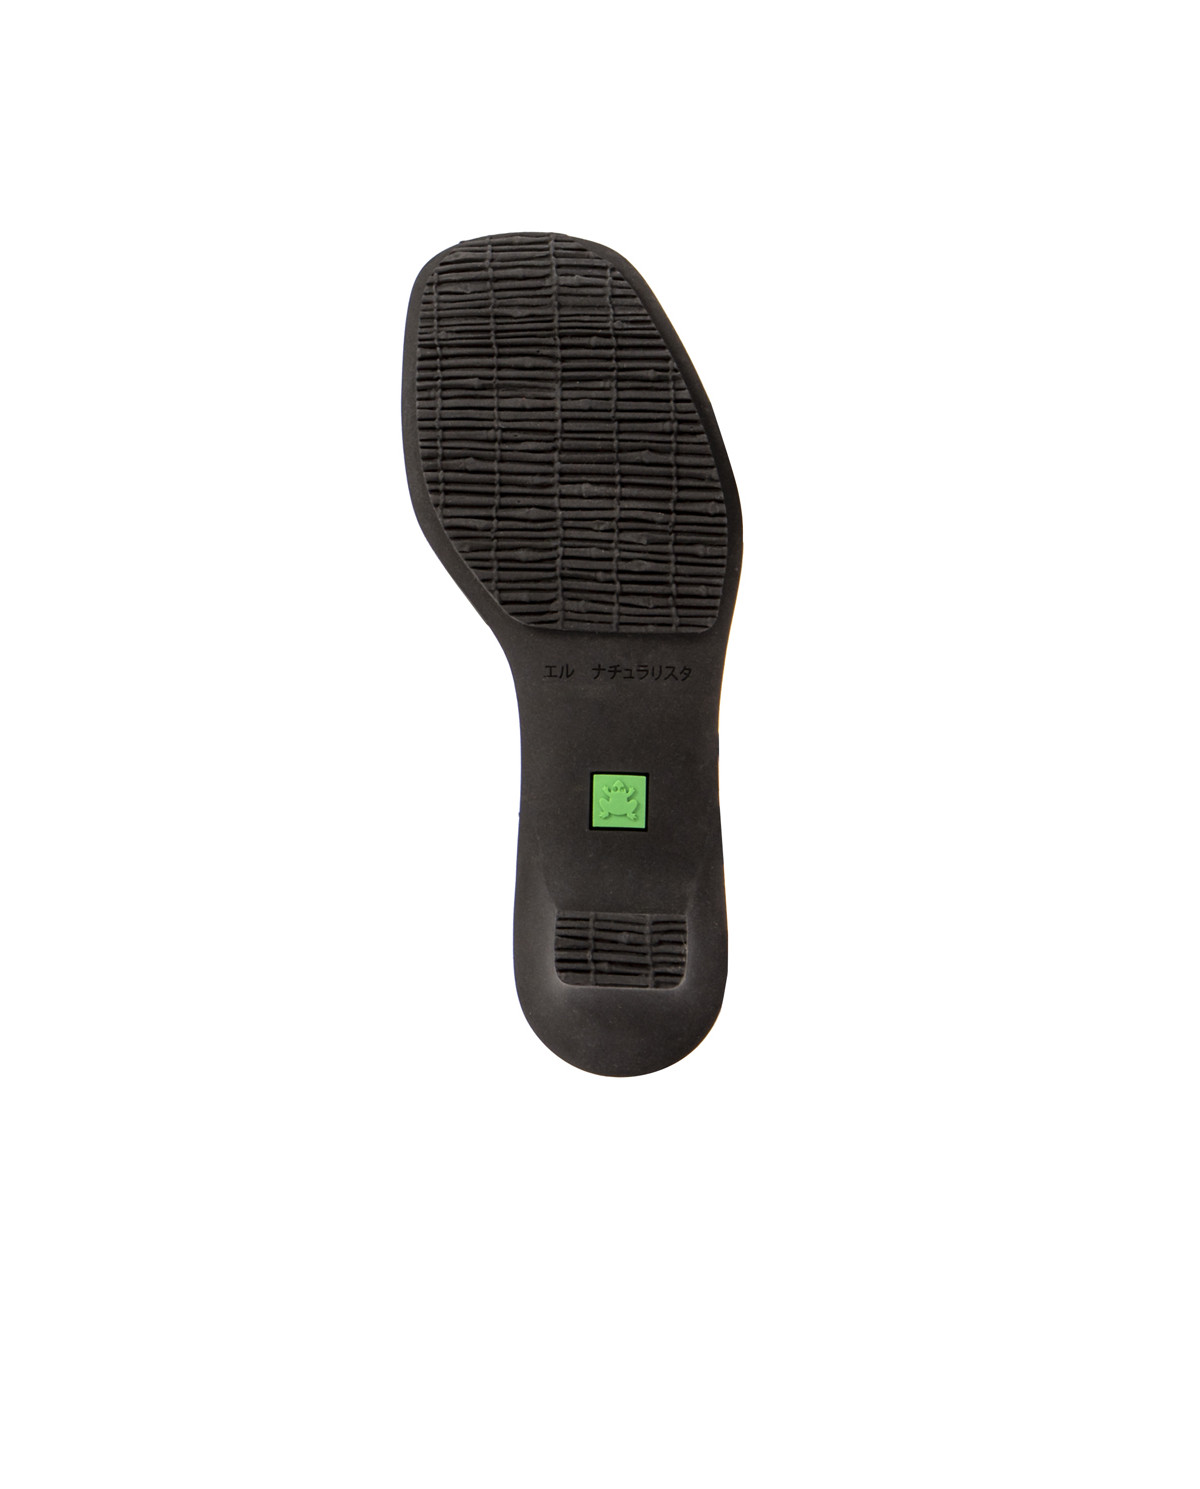 Sandales confortables en cuir à petit talon - Noir - El naturalista